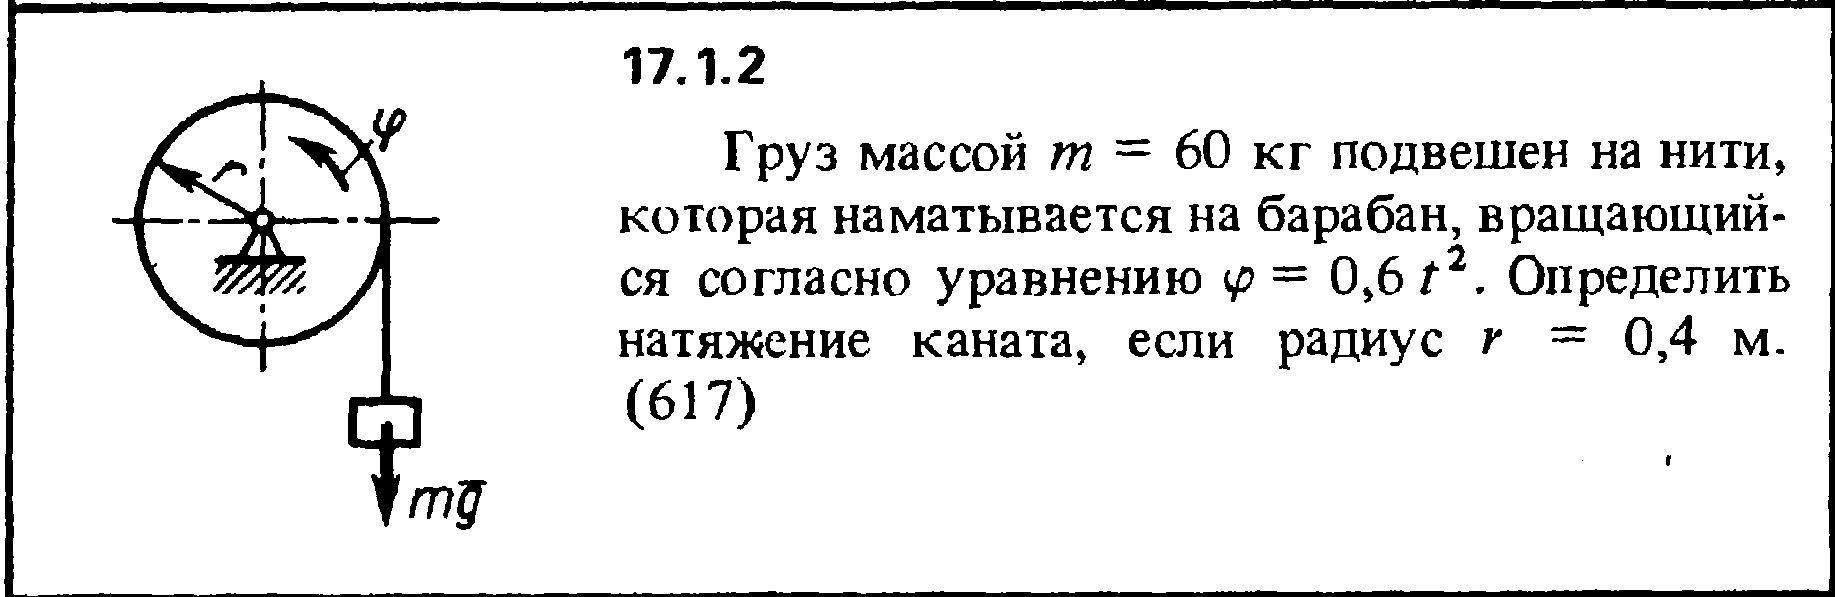 Решение задачи 17.1.2 из сборника Кепе О.Е. 1989 года